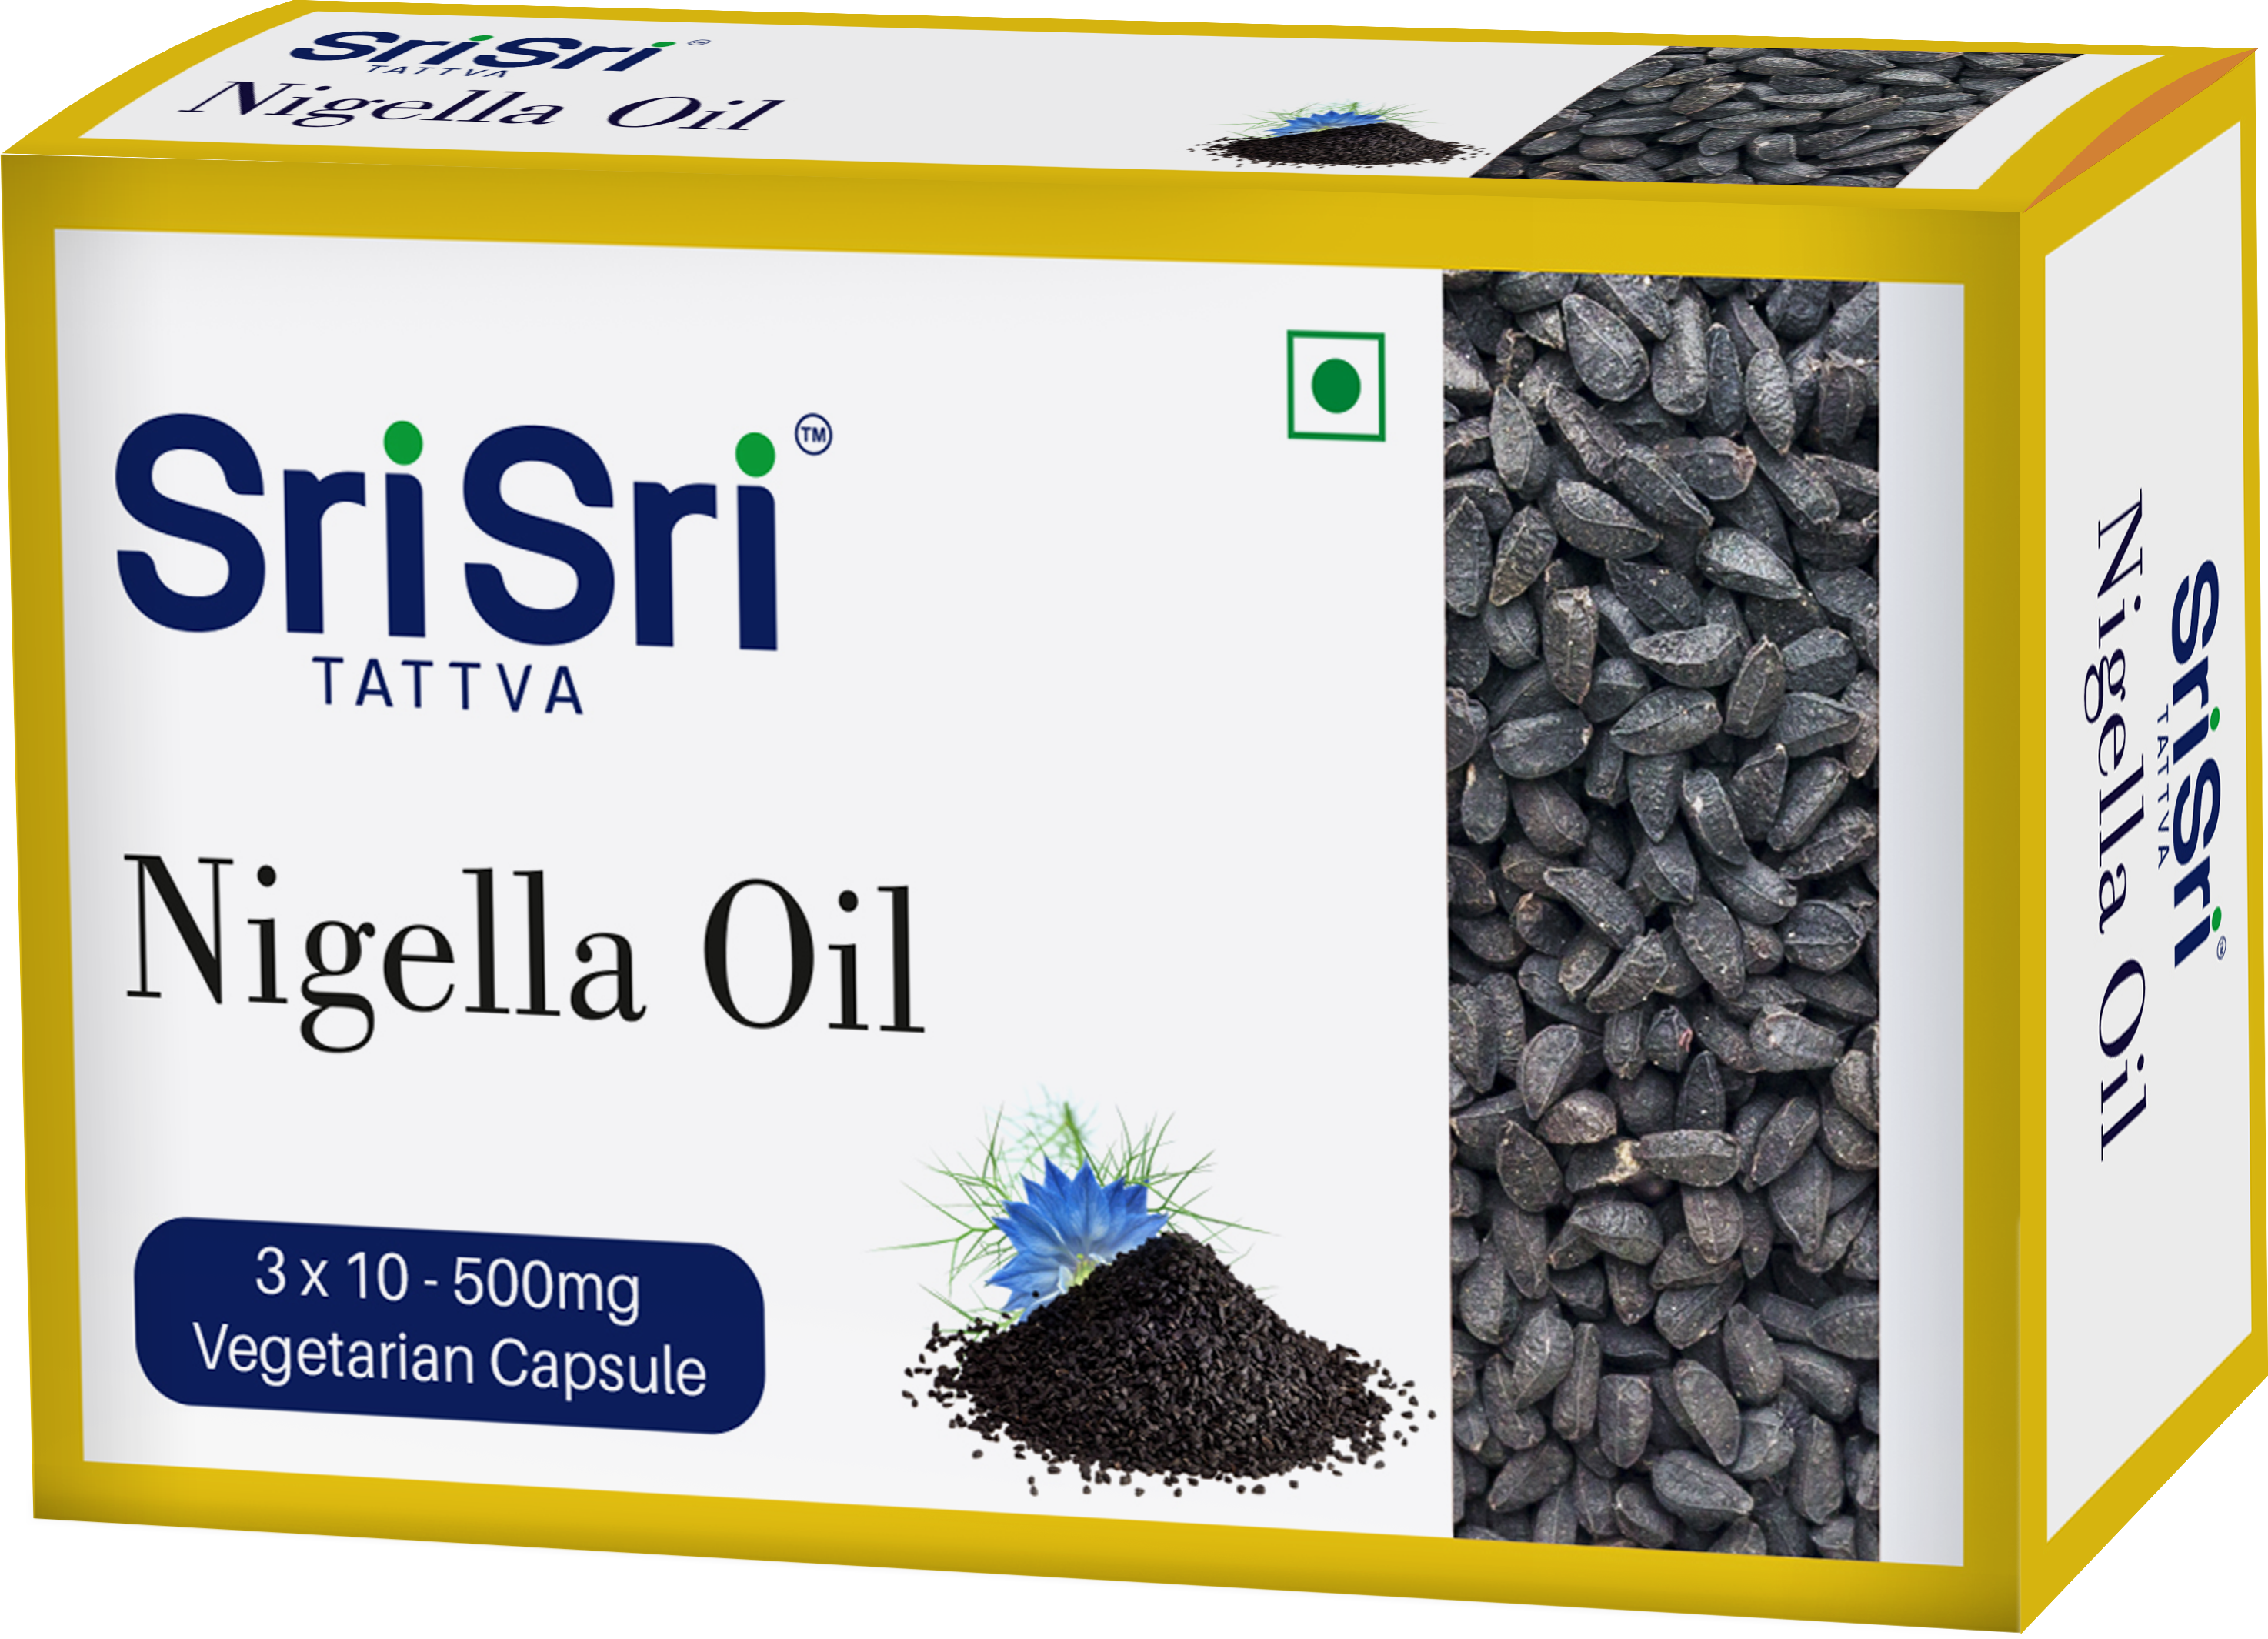 Buy Sri Sri Tattva Nigella Oil Veg Capsule at Best Price Online